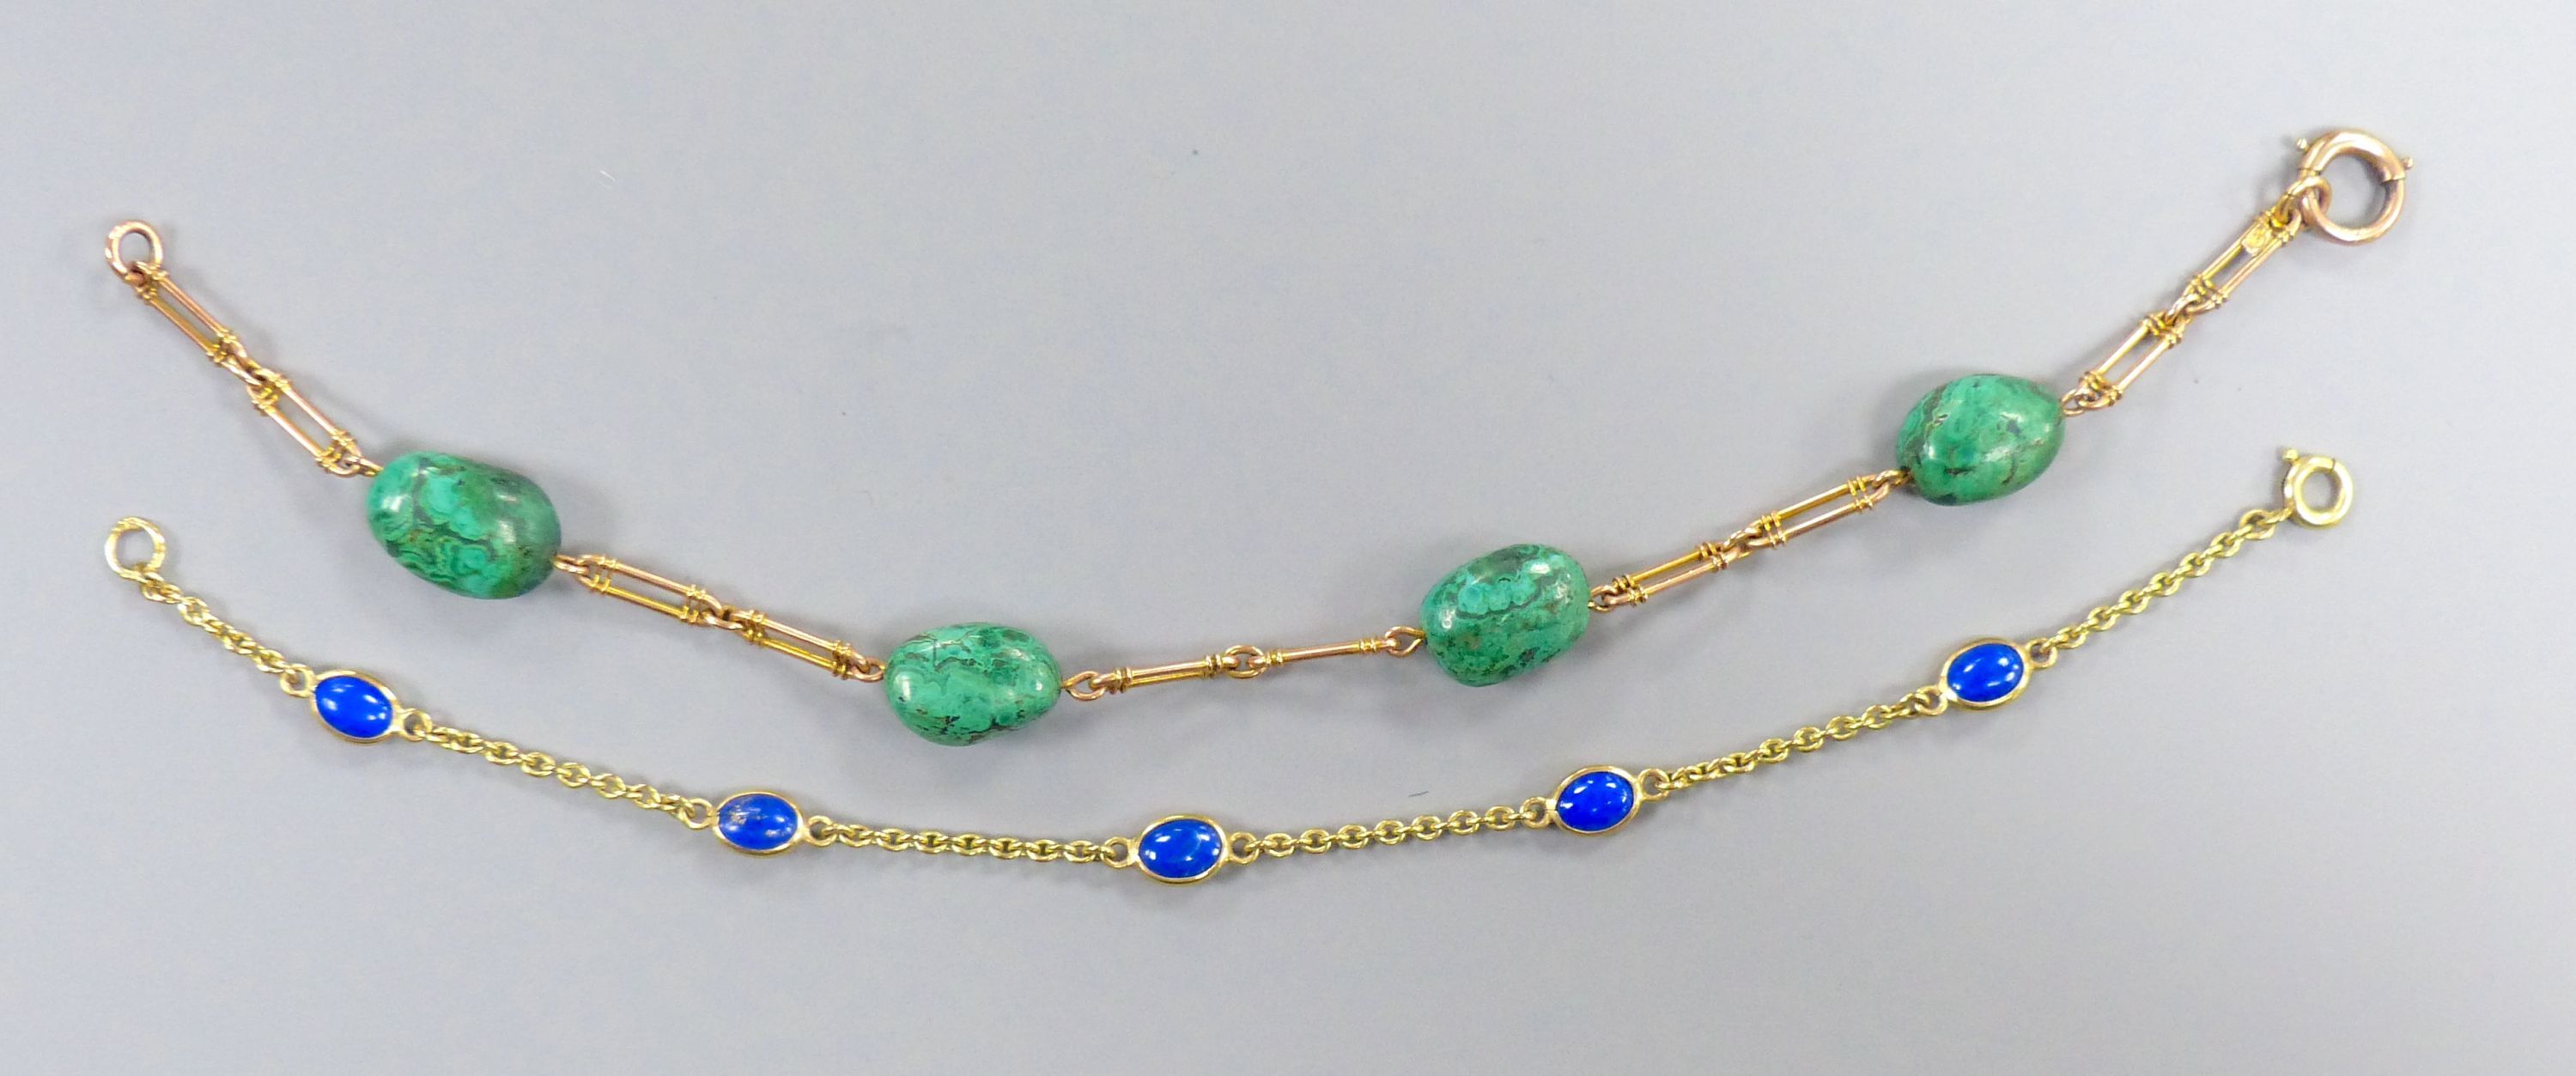 A 9ct and four stone malachite pebble set bracelet, 19cm and a modern 9ct gold and lapis lazuli bracelet, 18.5cm,